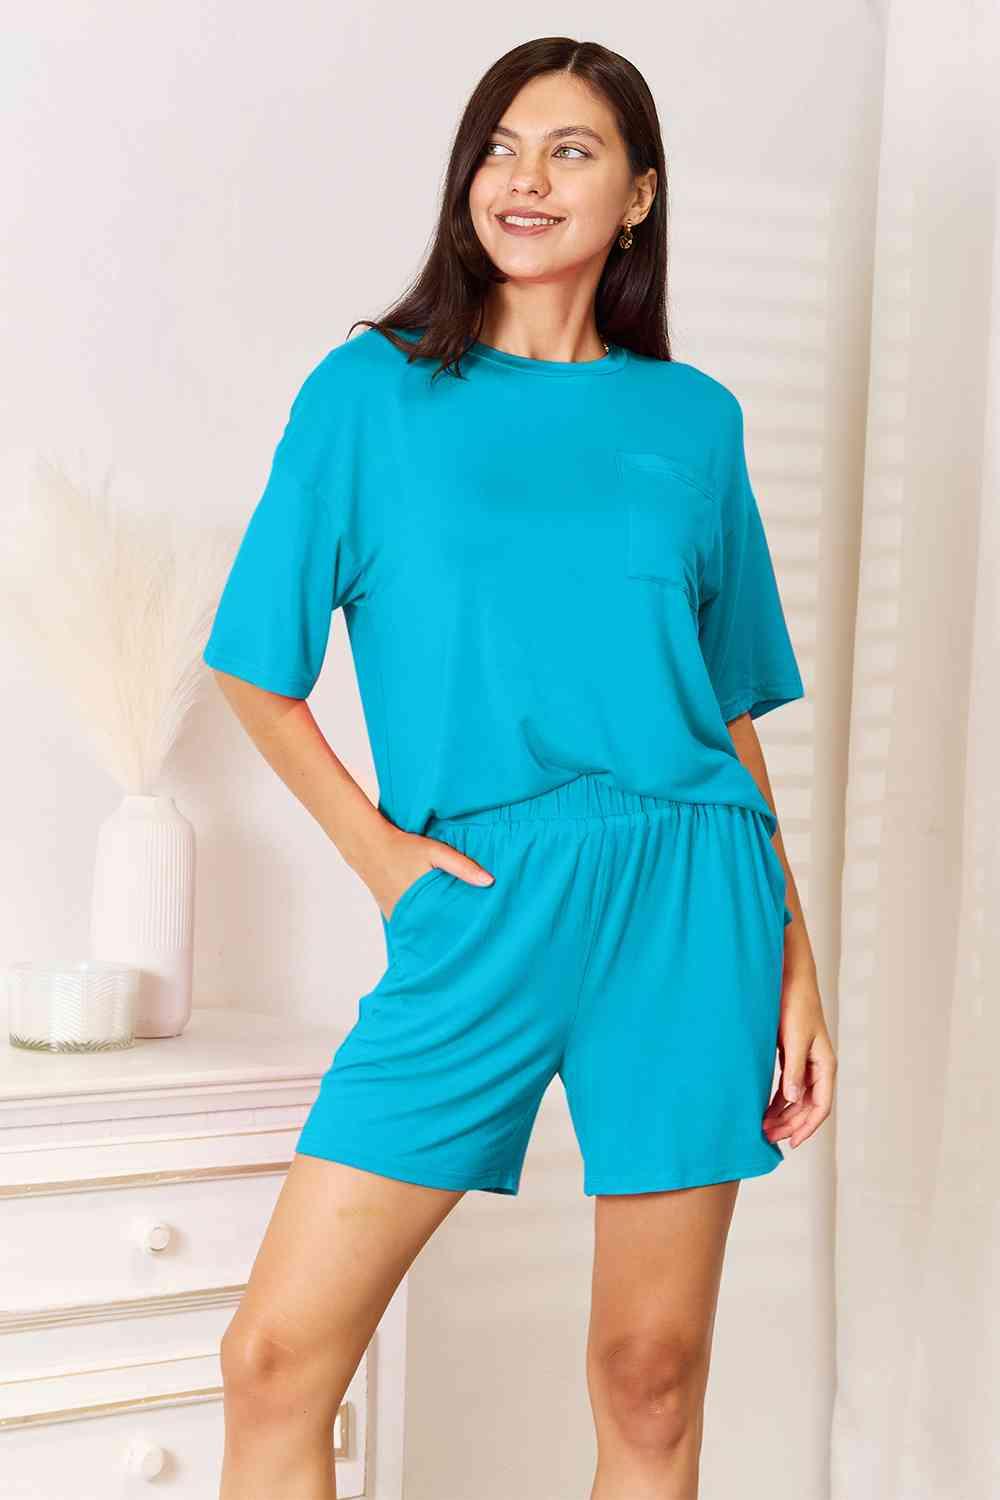 Basic Bae Full Size Soft Rayon Half Sleeve Top and Shorts Set - AMIClubwear